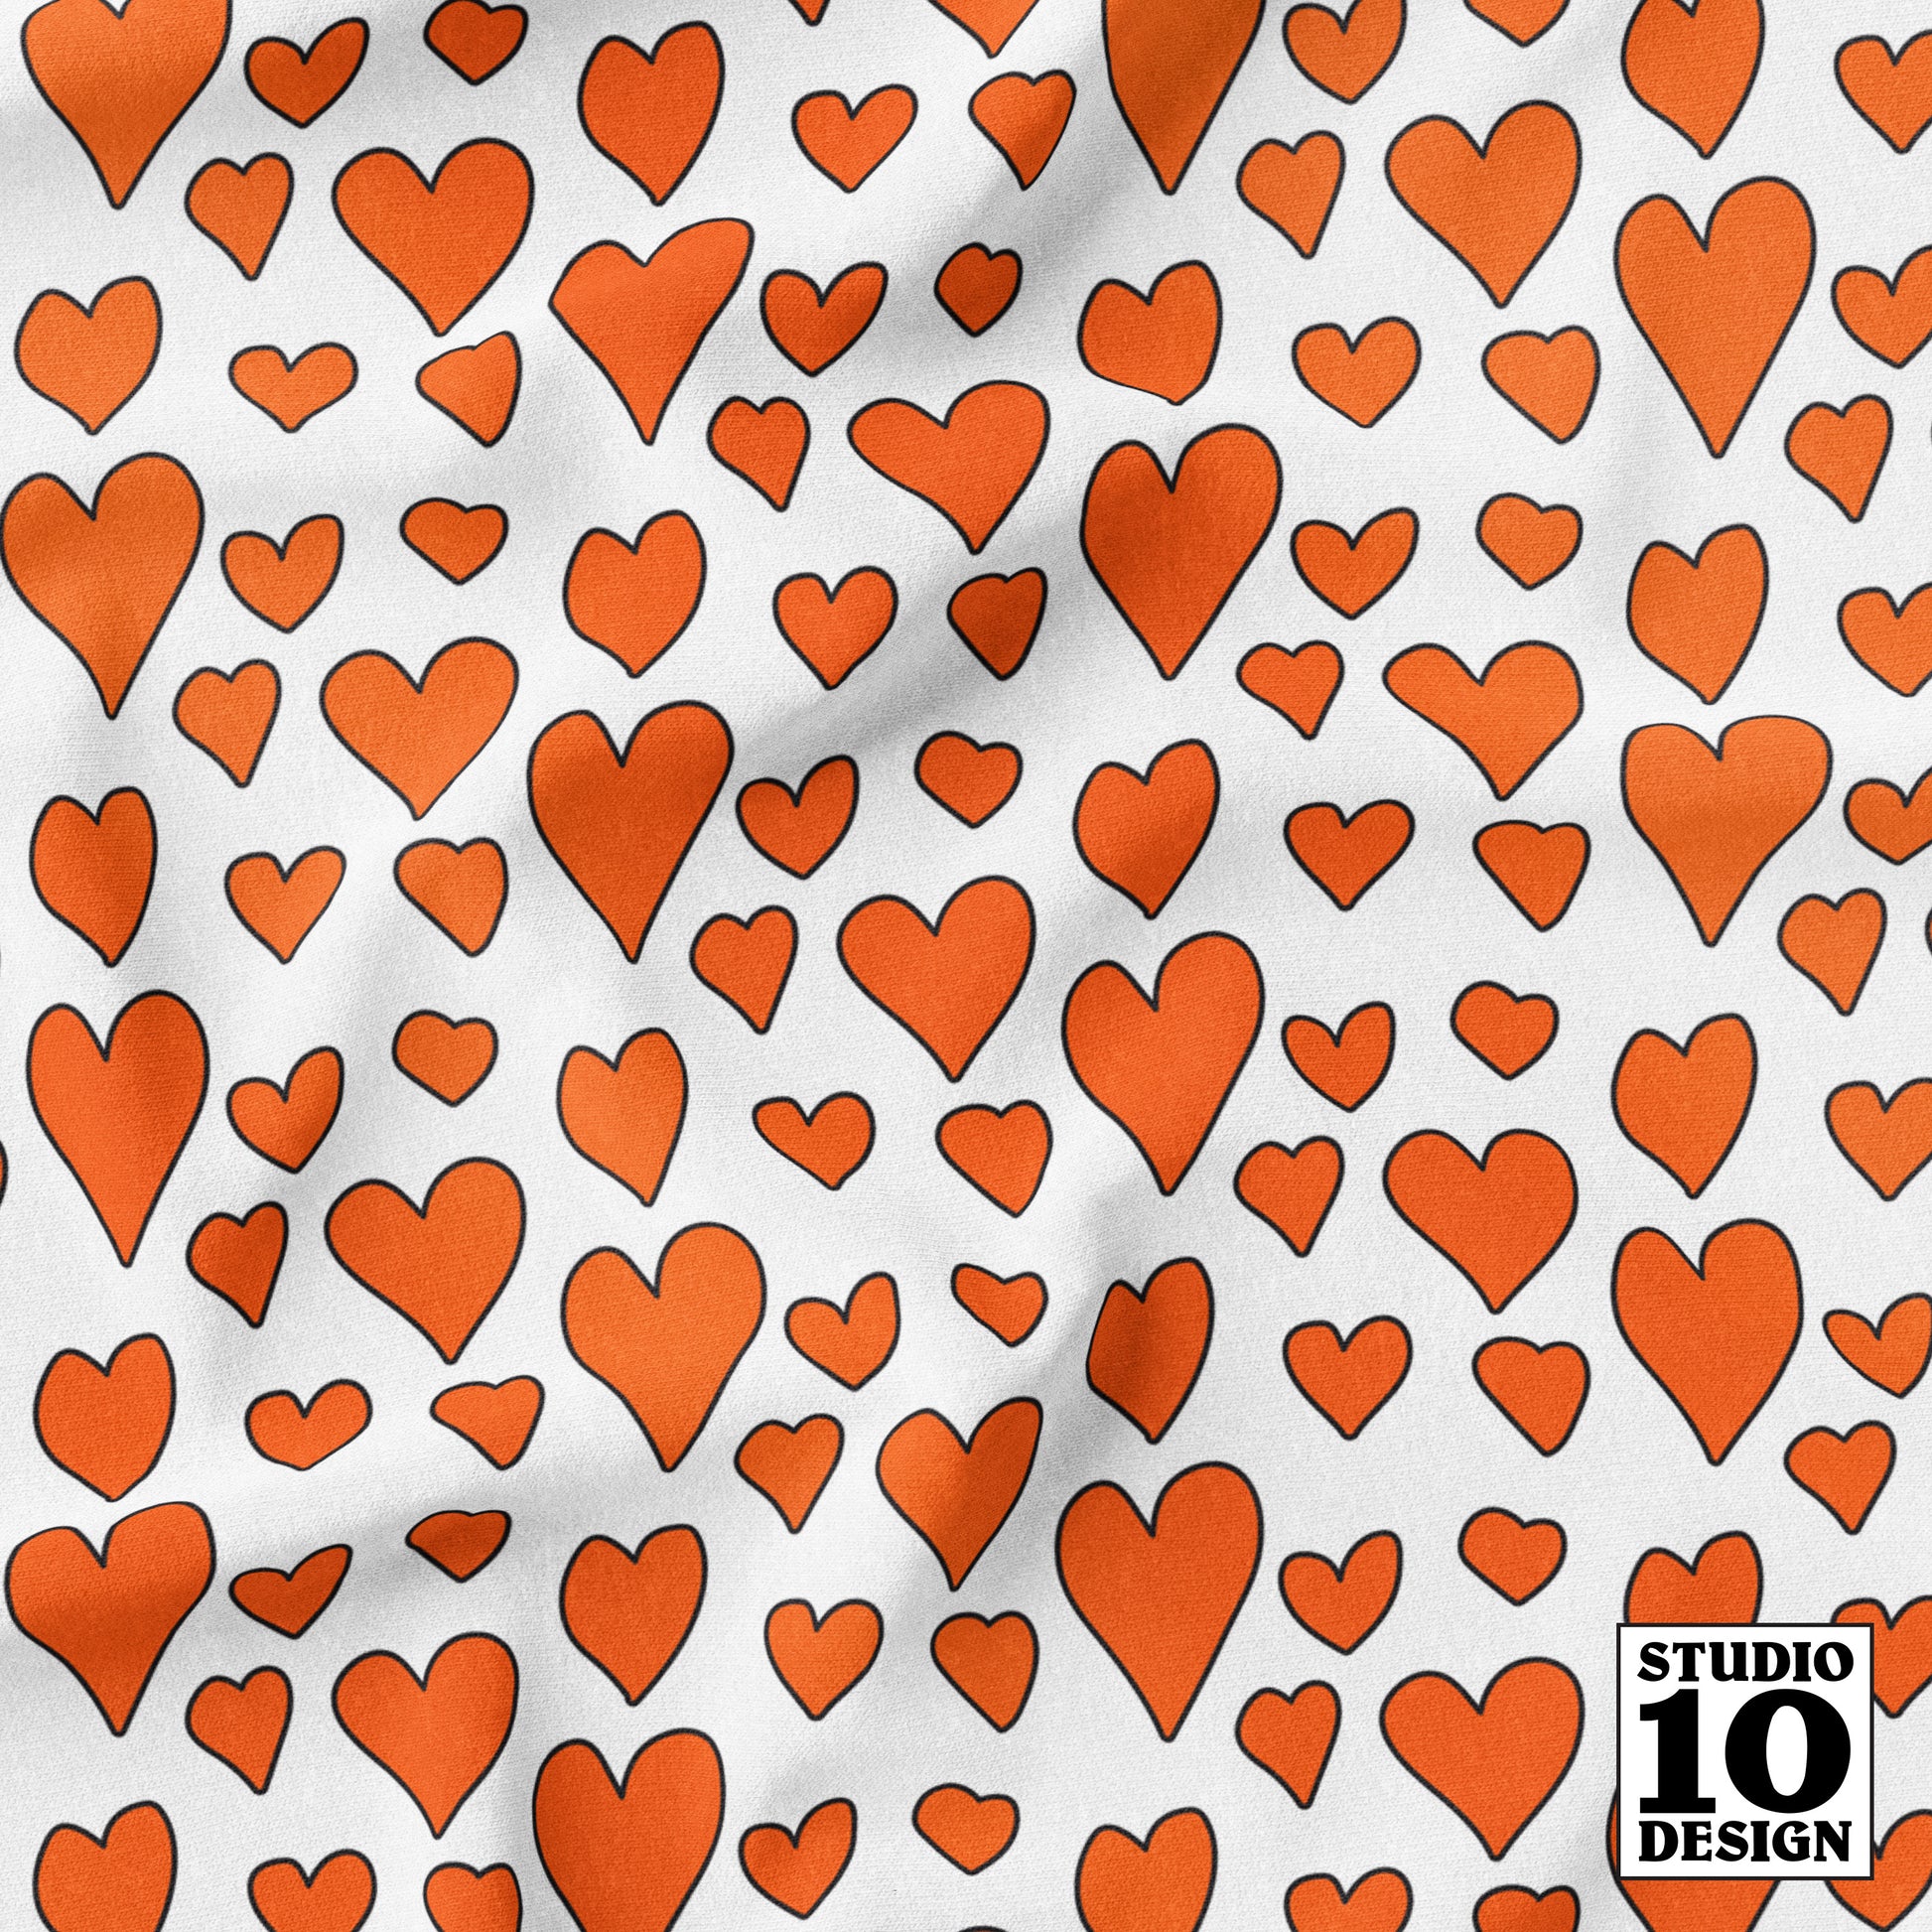 Rainbow Hearts Orange+White Printed Fabric by Studio Ten Design